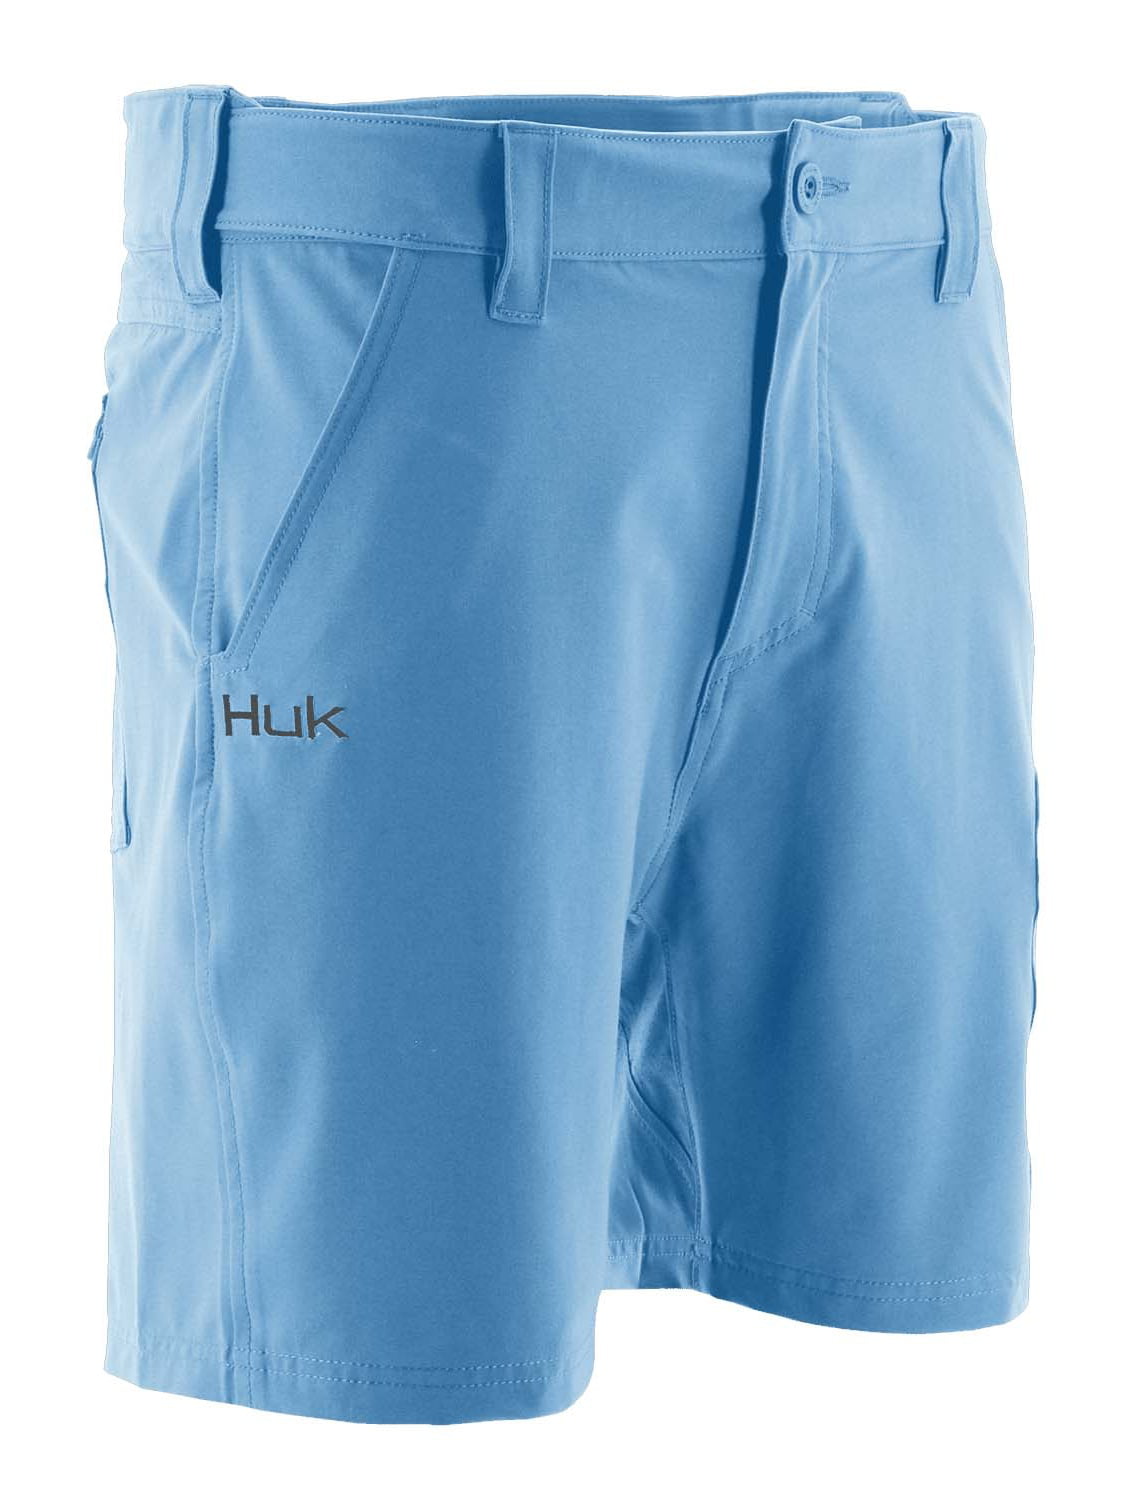 HUK NXTLVL 7 Short (Carolina Blue, 2X-Large) 